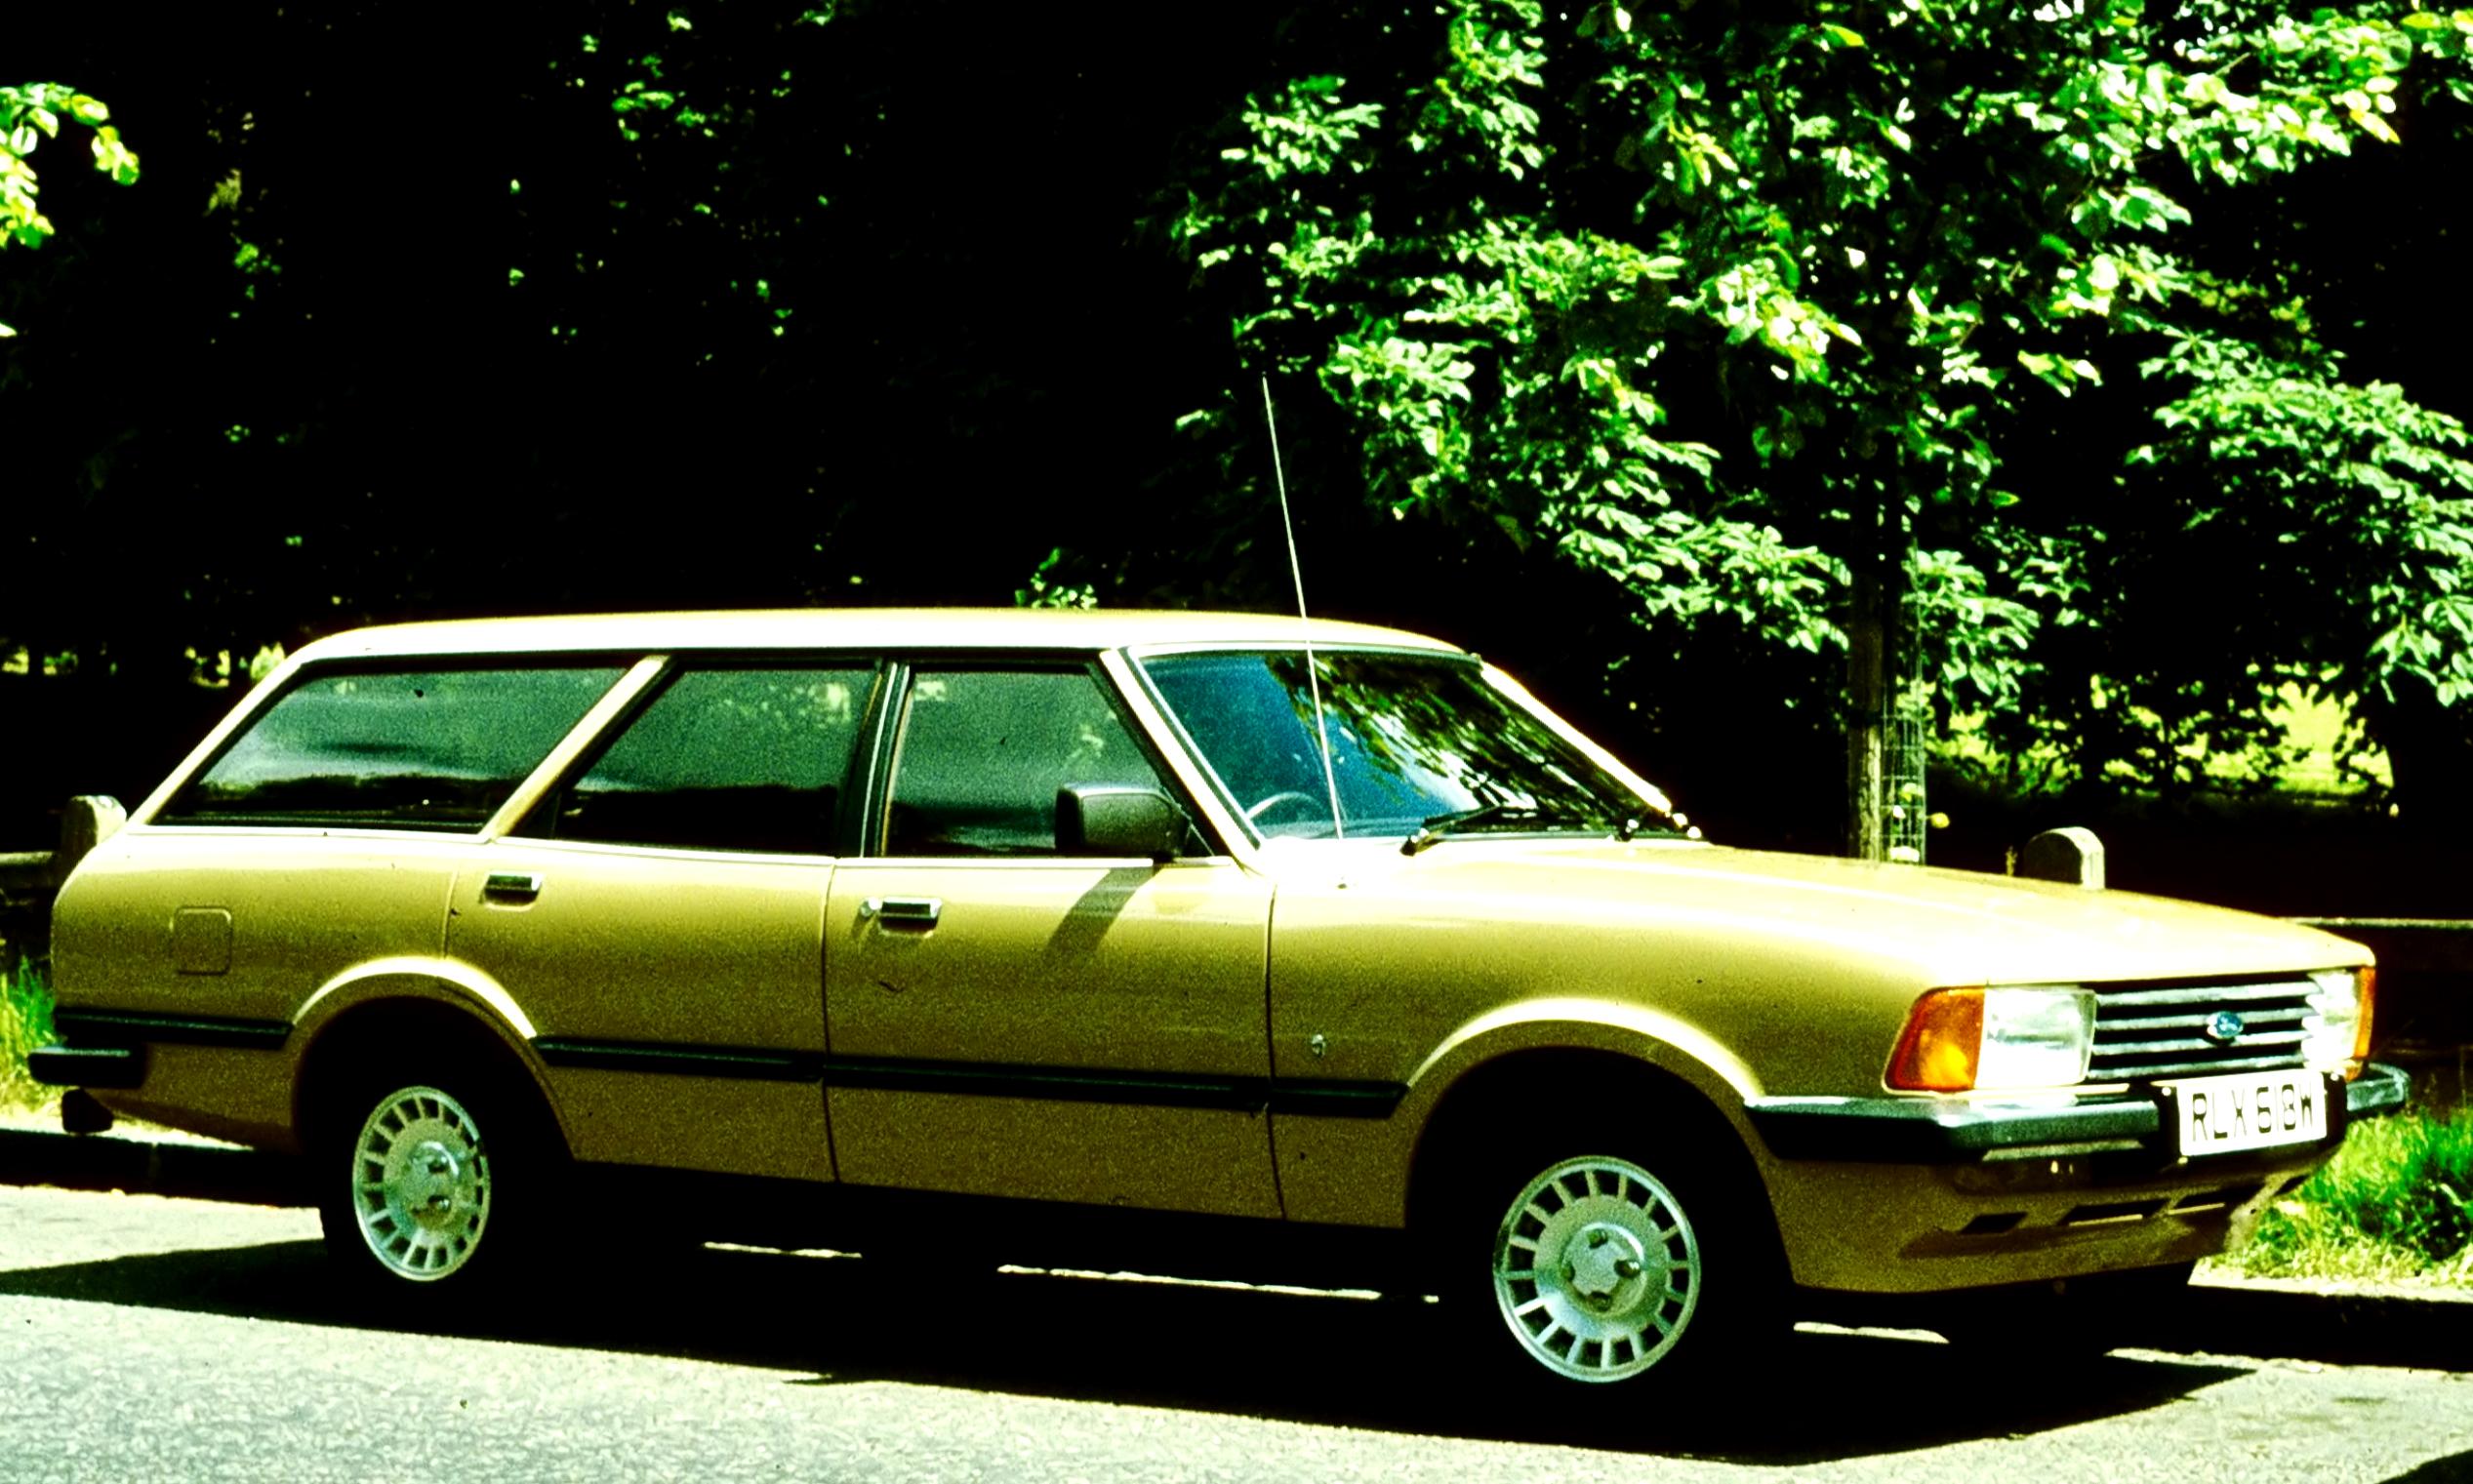 Ford Cortina 1976 #14